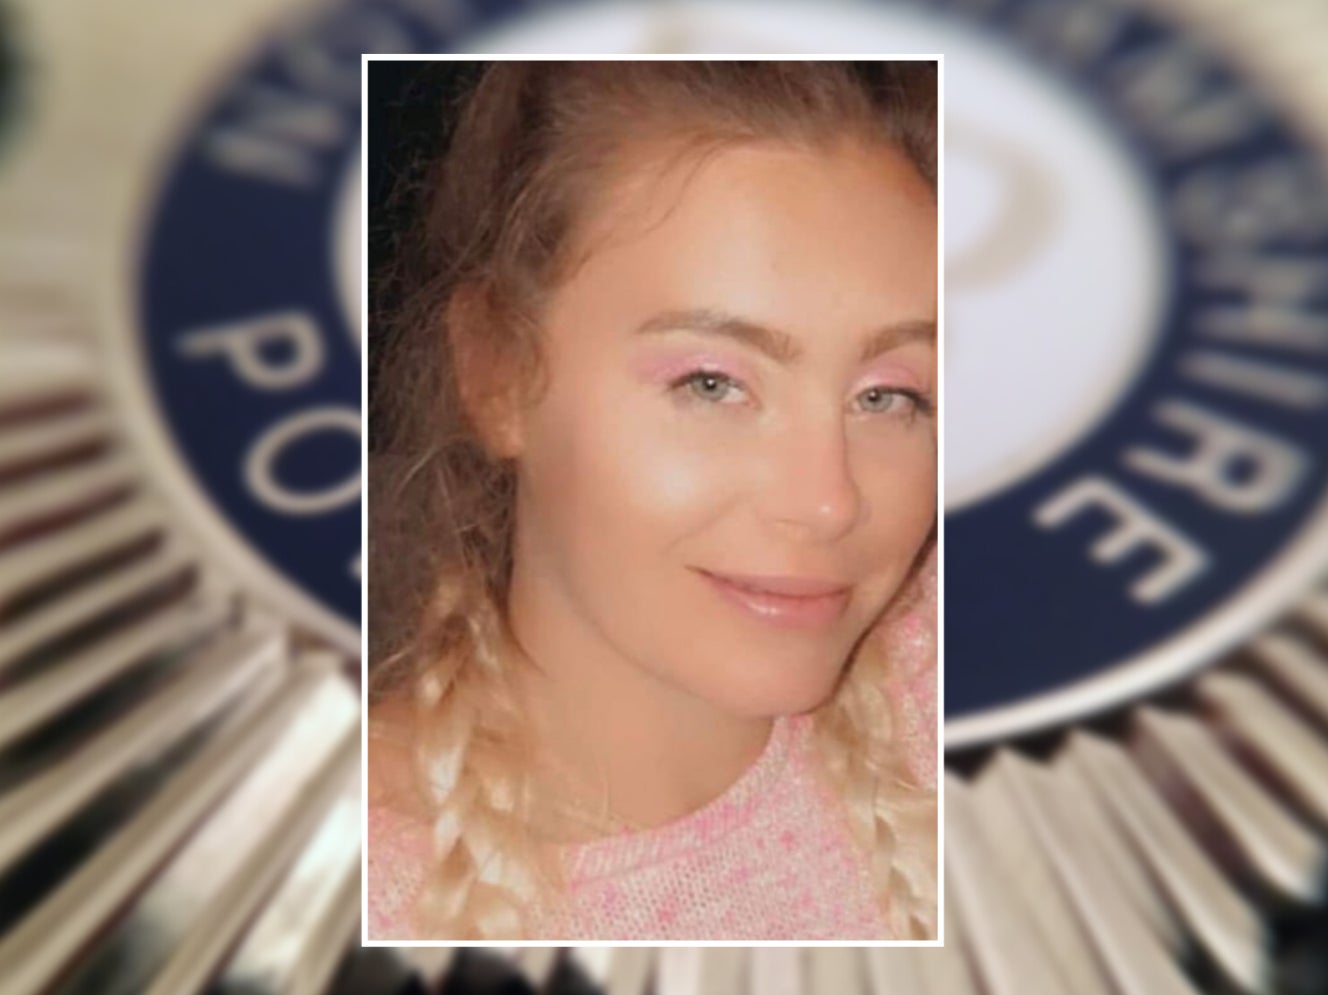 Mckyla Taylor was found dead at a house in Worksop, Nottinghamshire